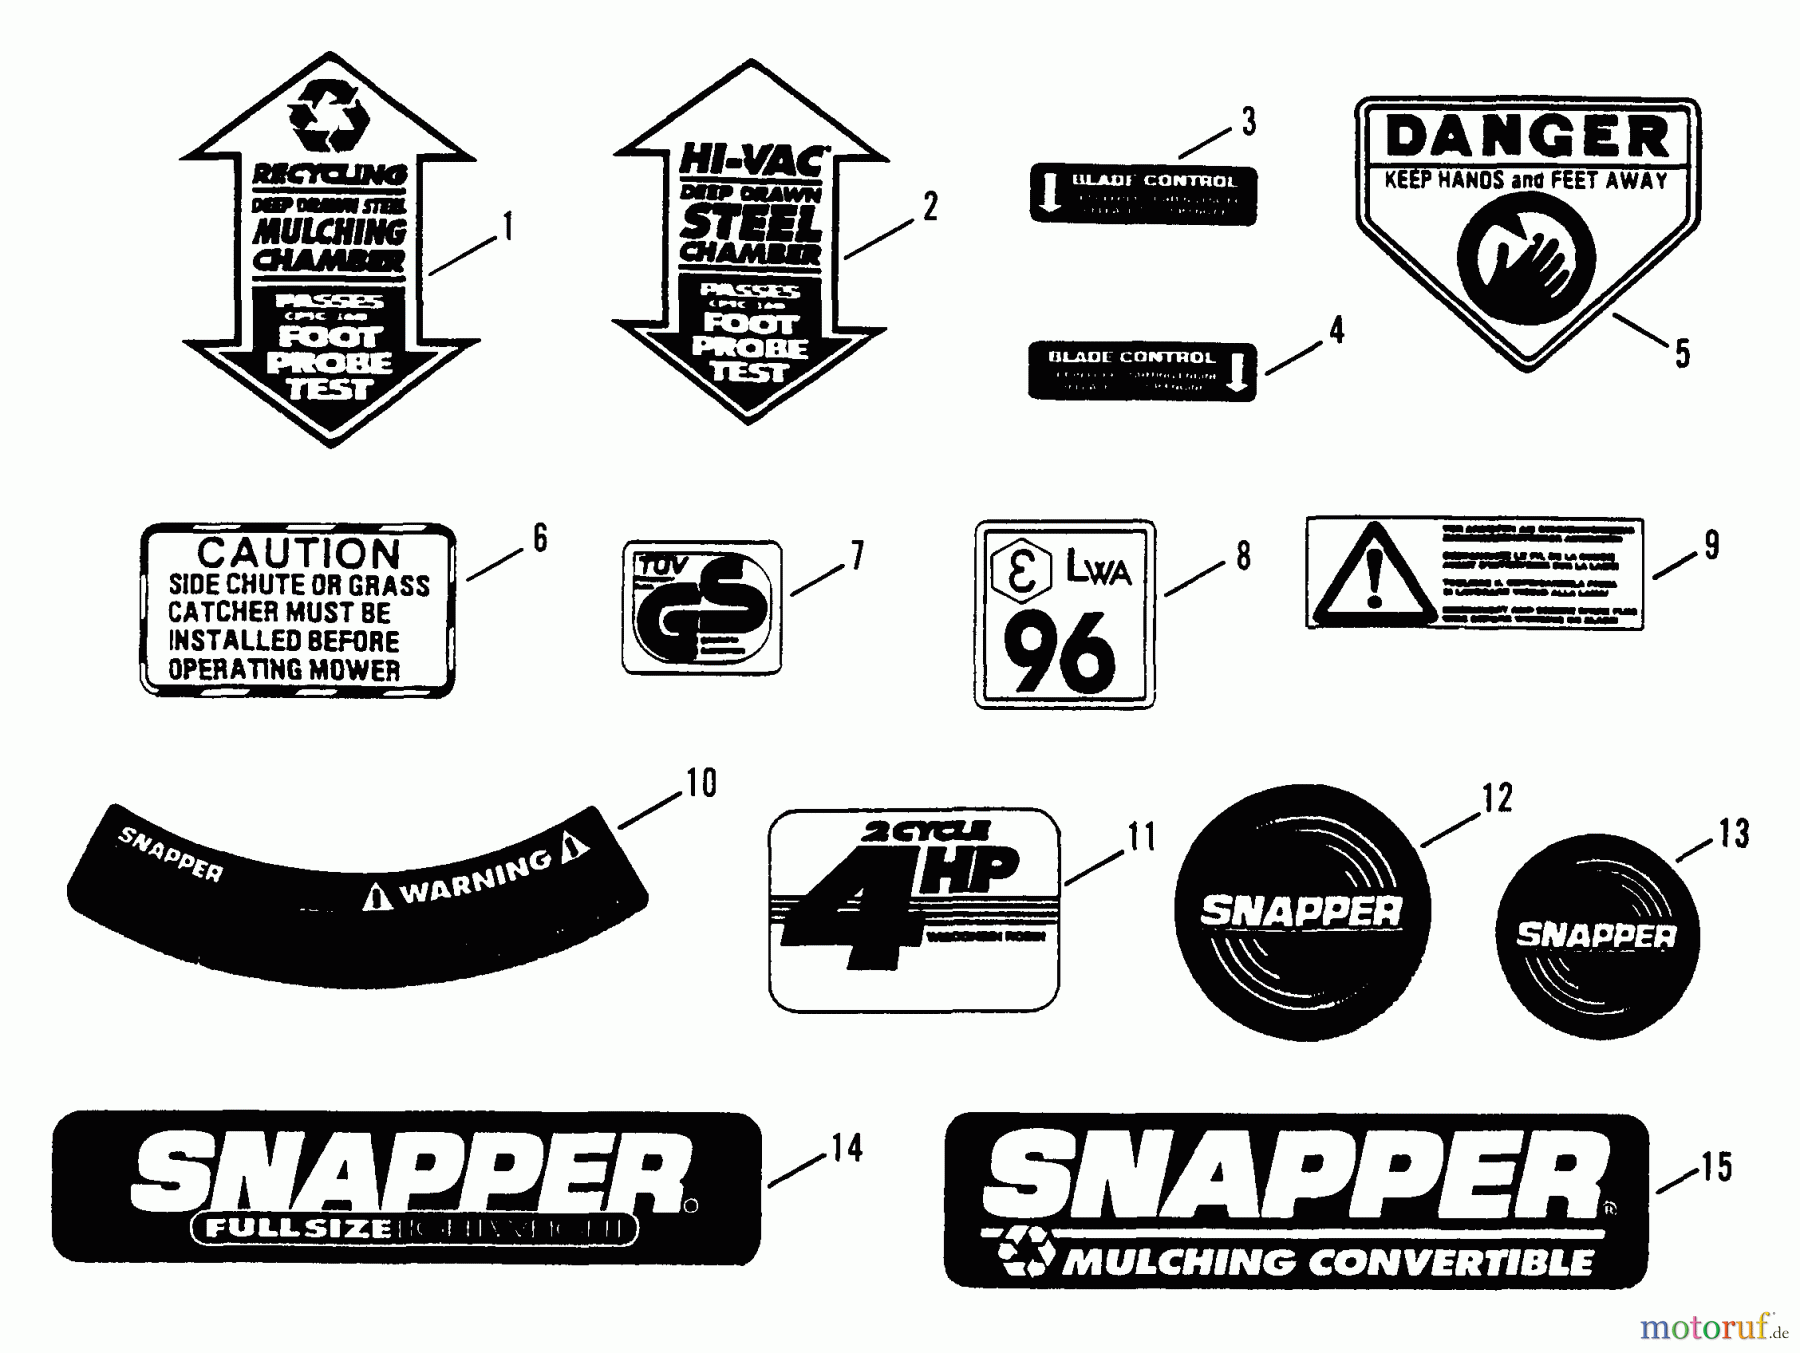  Snapper Rasenmäher D20380 - Snapper 20